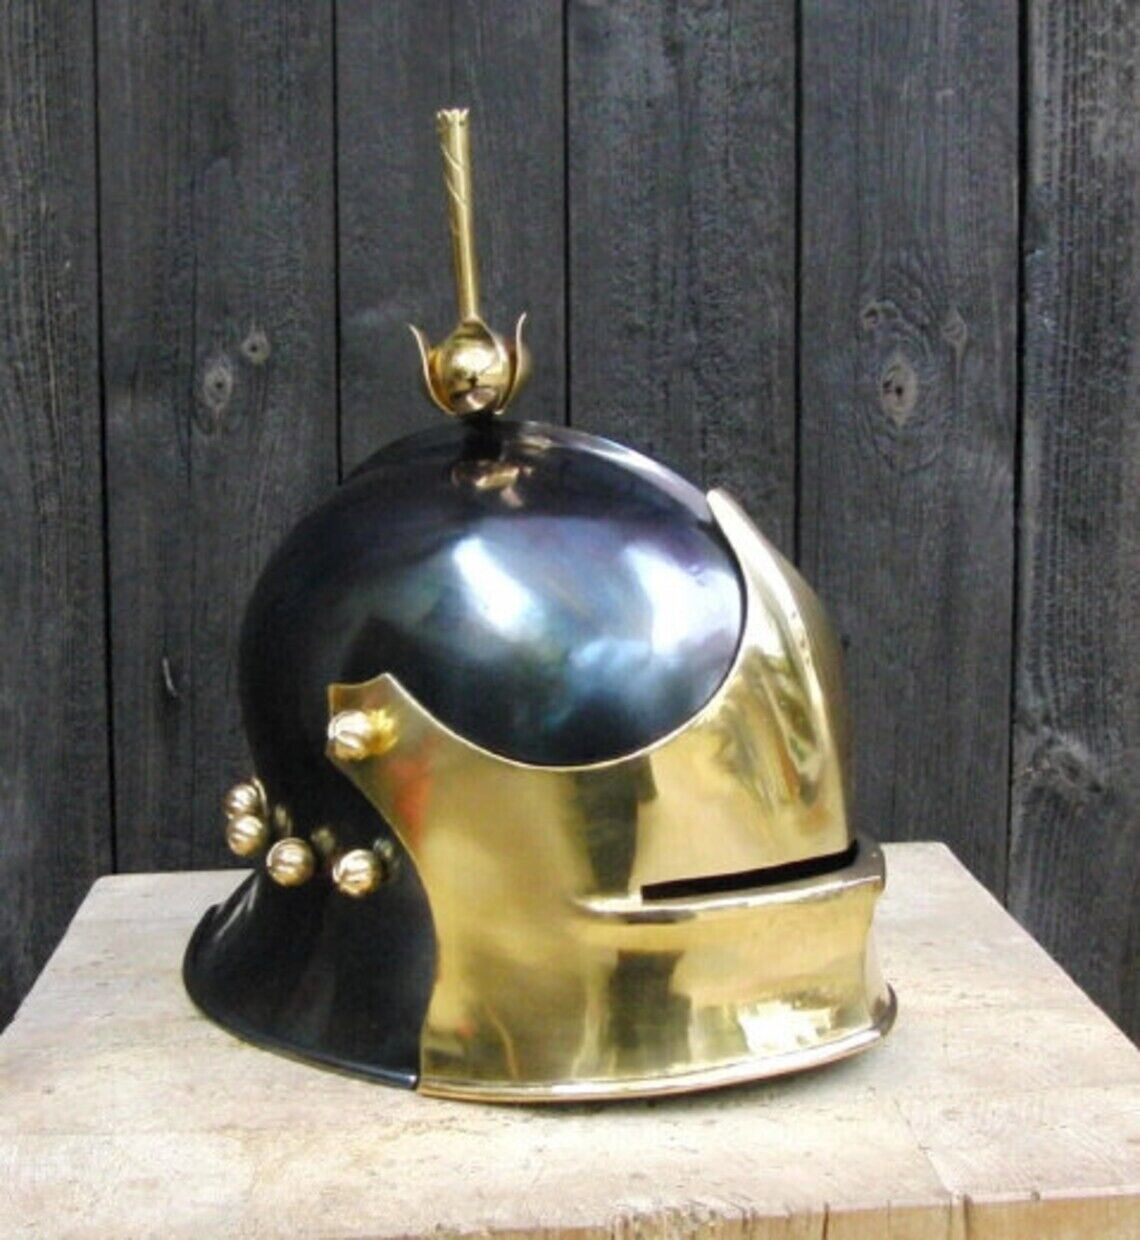 Medieval Steel Italian Sallet Helmet Burgundy Style Battle Warrior Armor Helmet